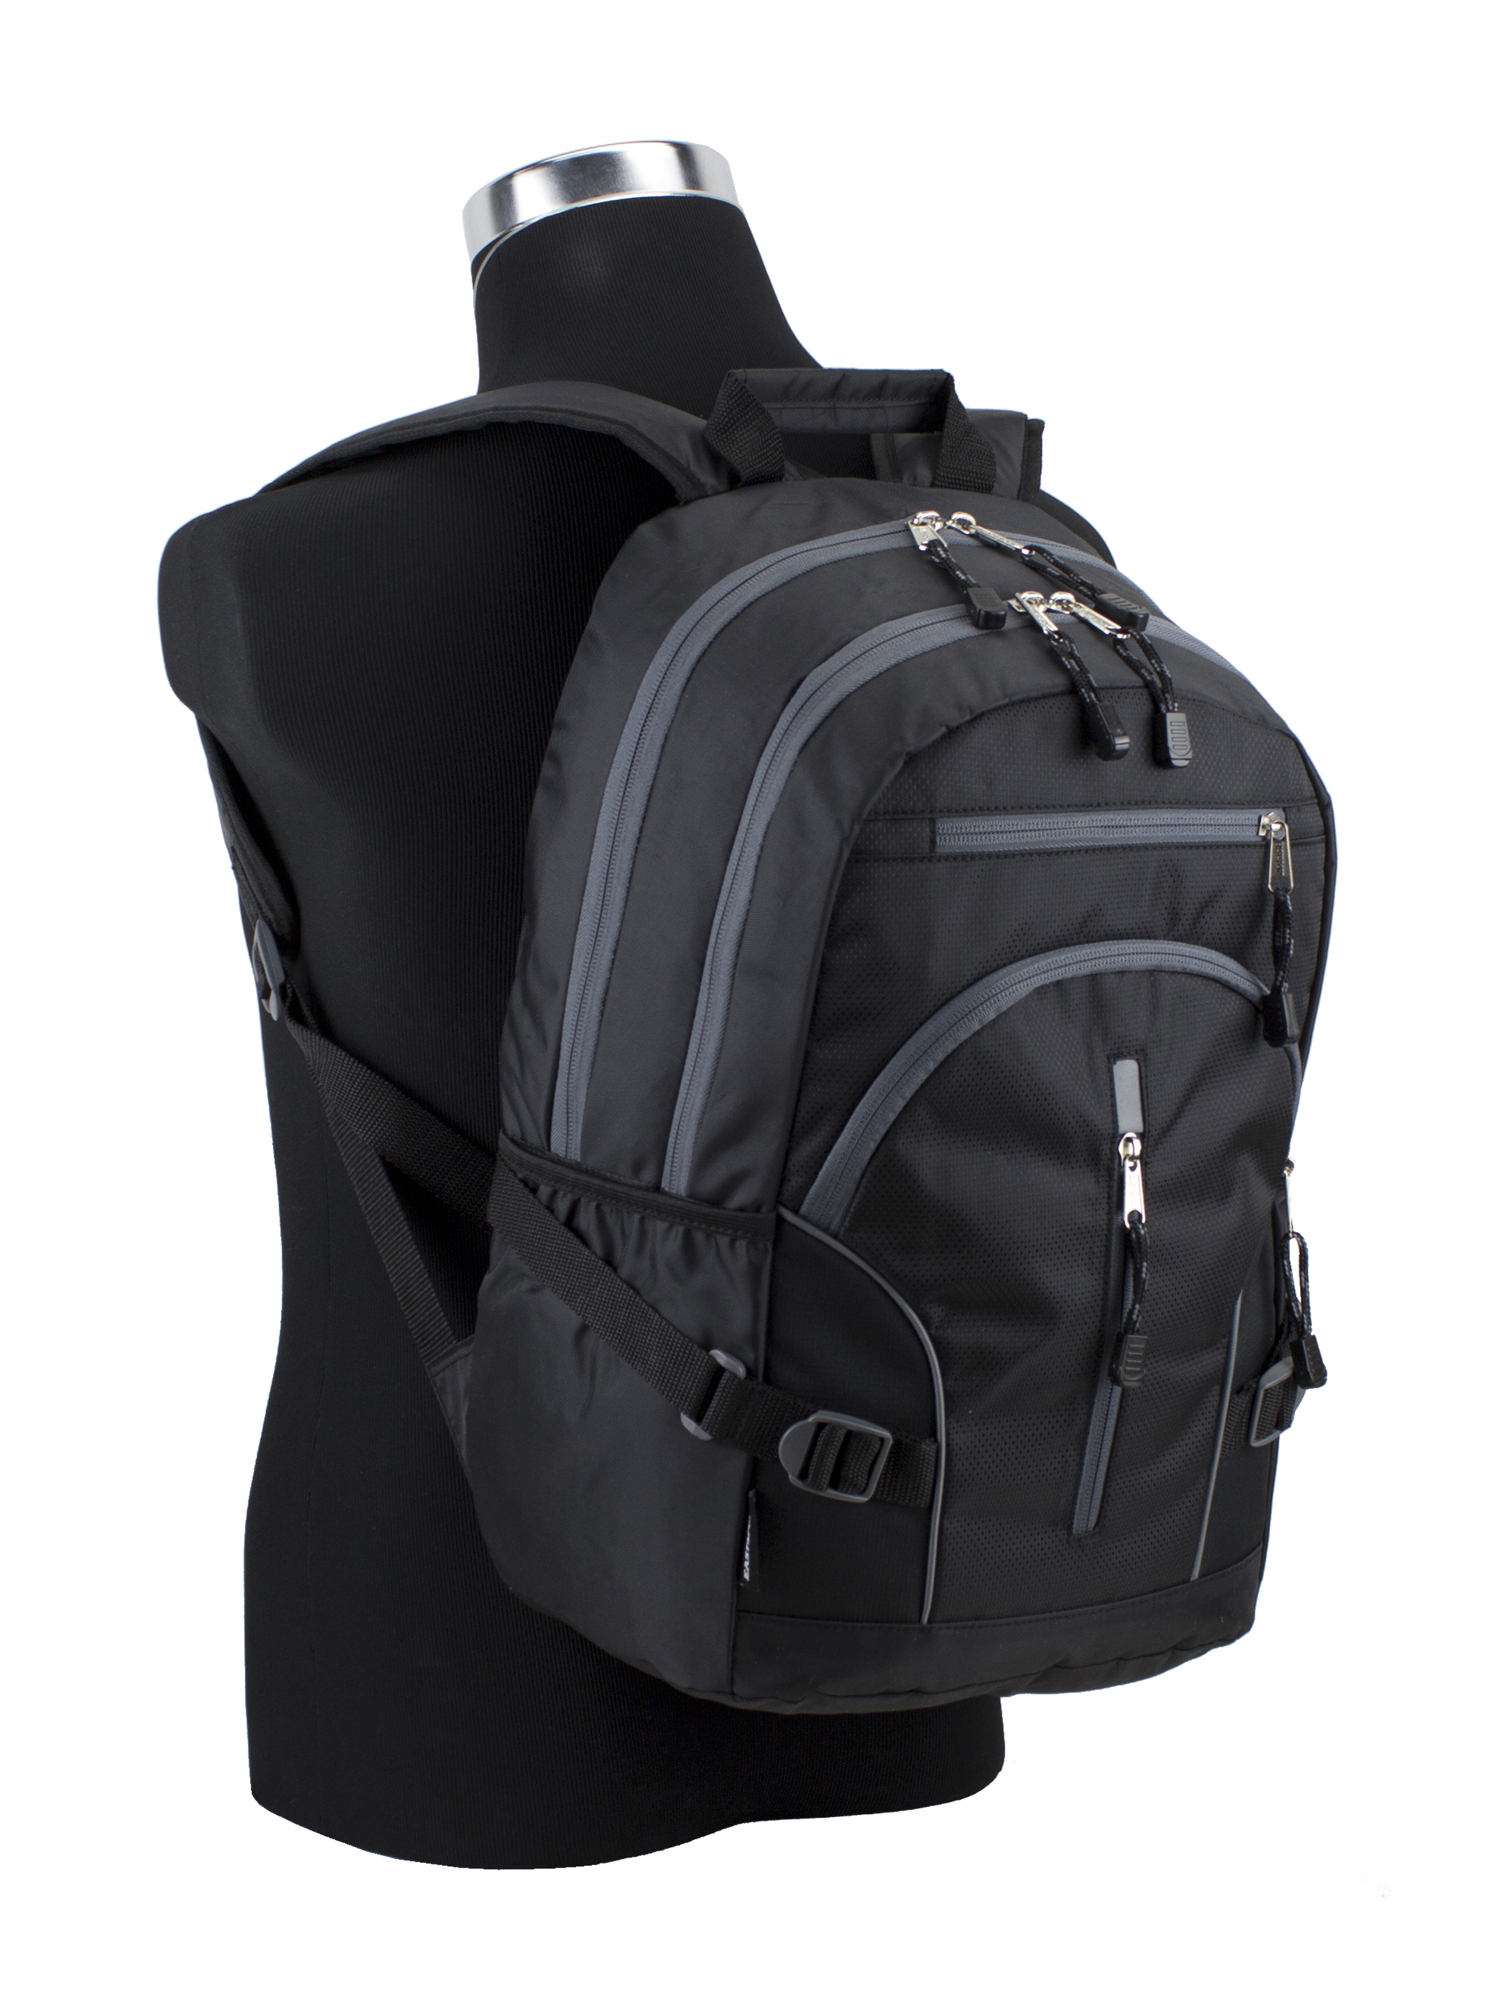 Eastsport Multi-Purpose Dynamic School Black Backpack - image 6 of 6